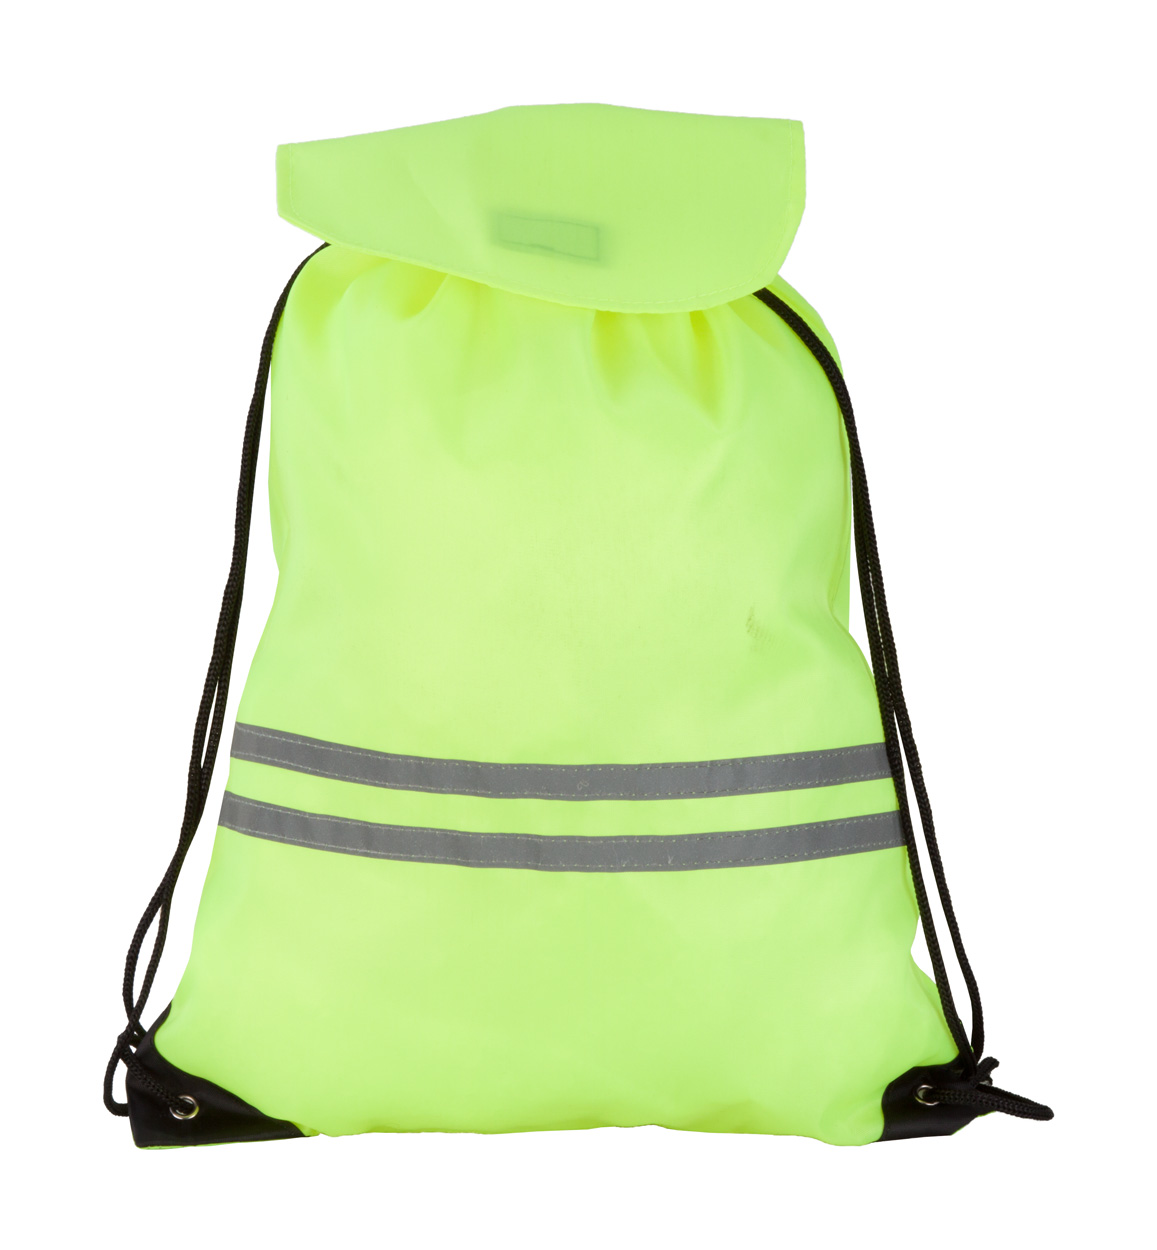 Carrylight reflective bag